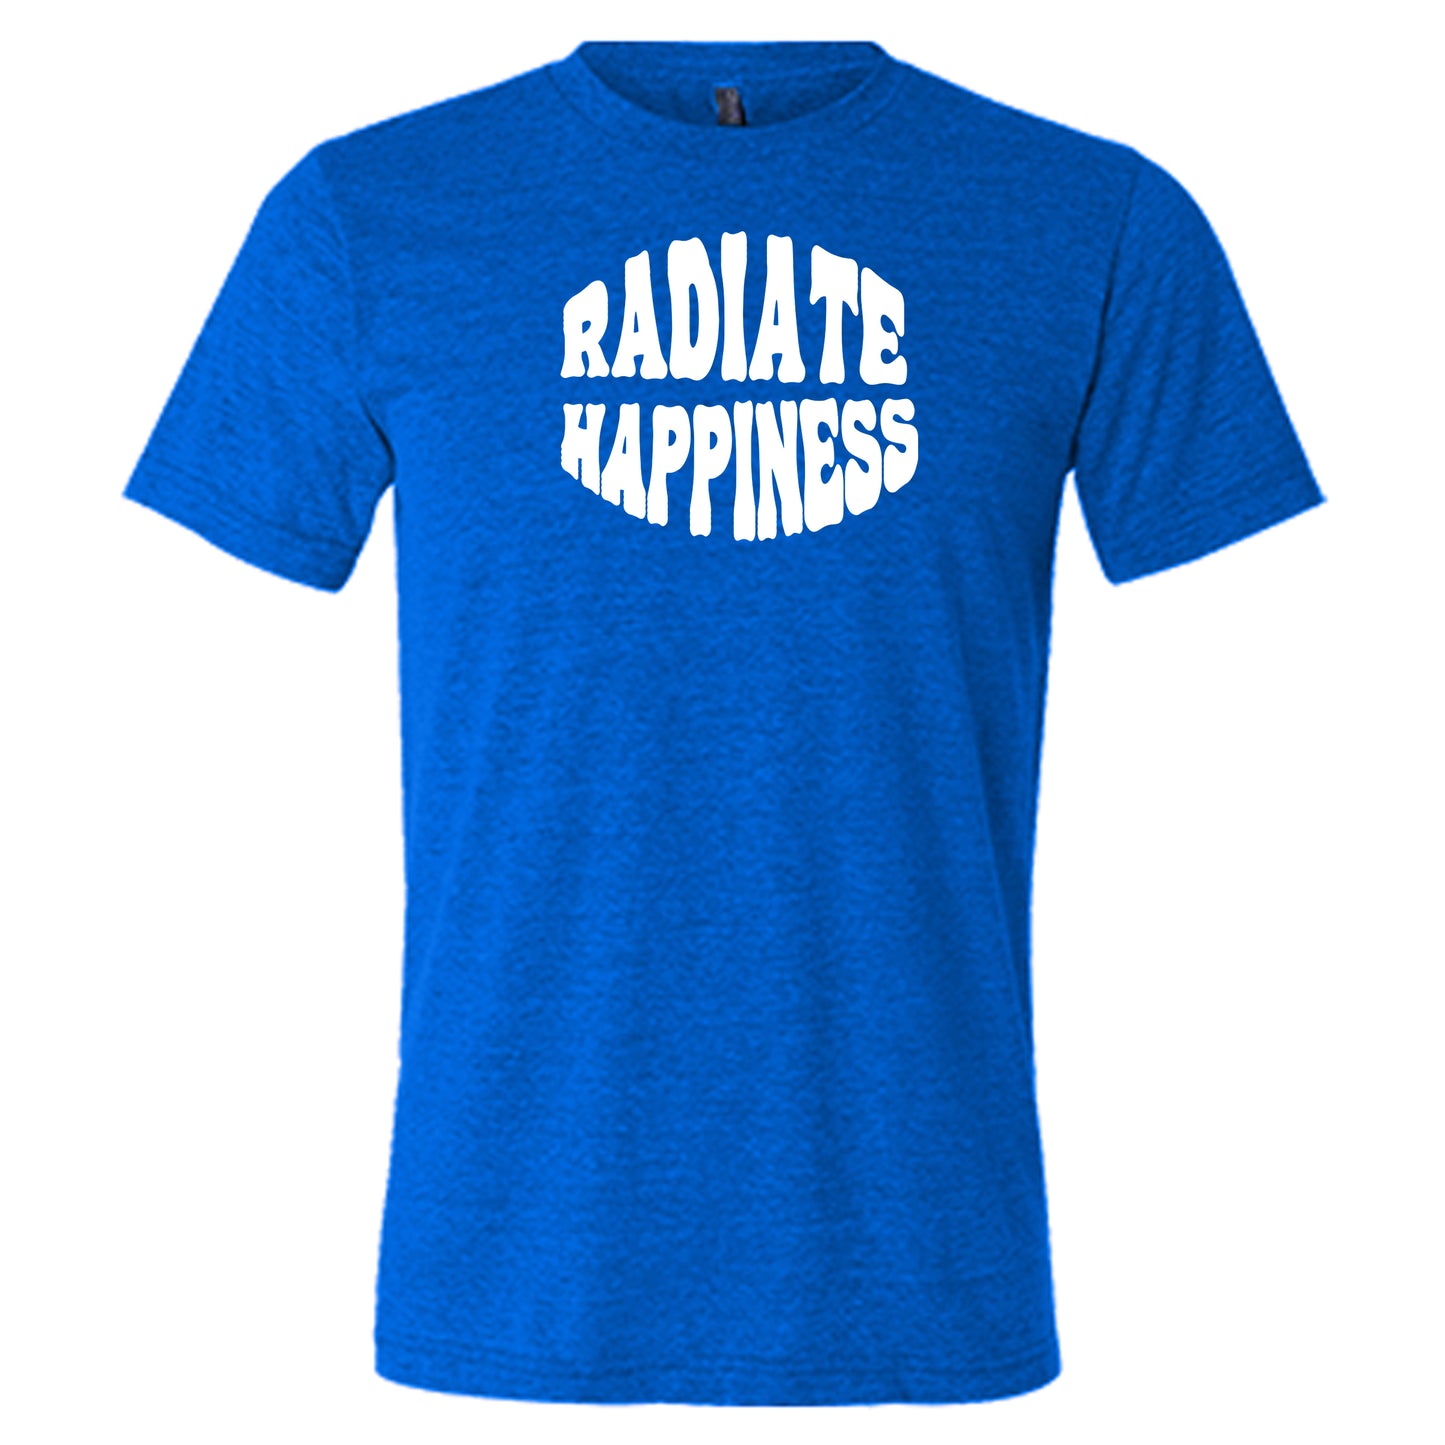 radiate happiness blue shirt